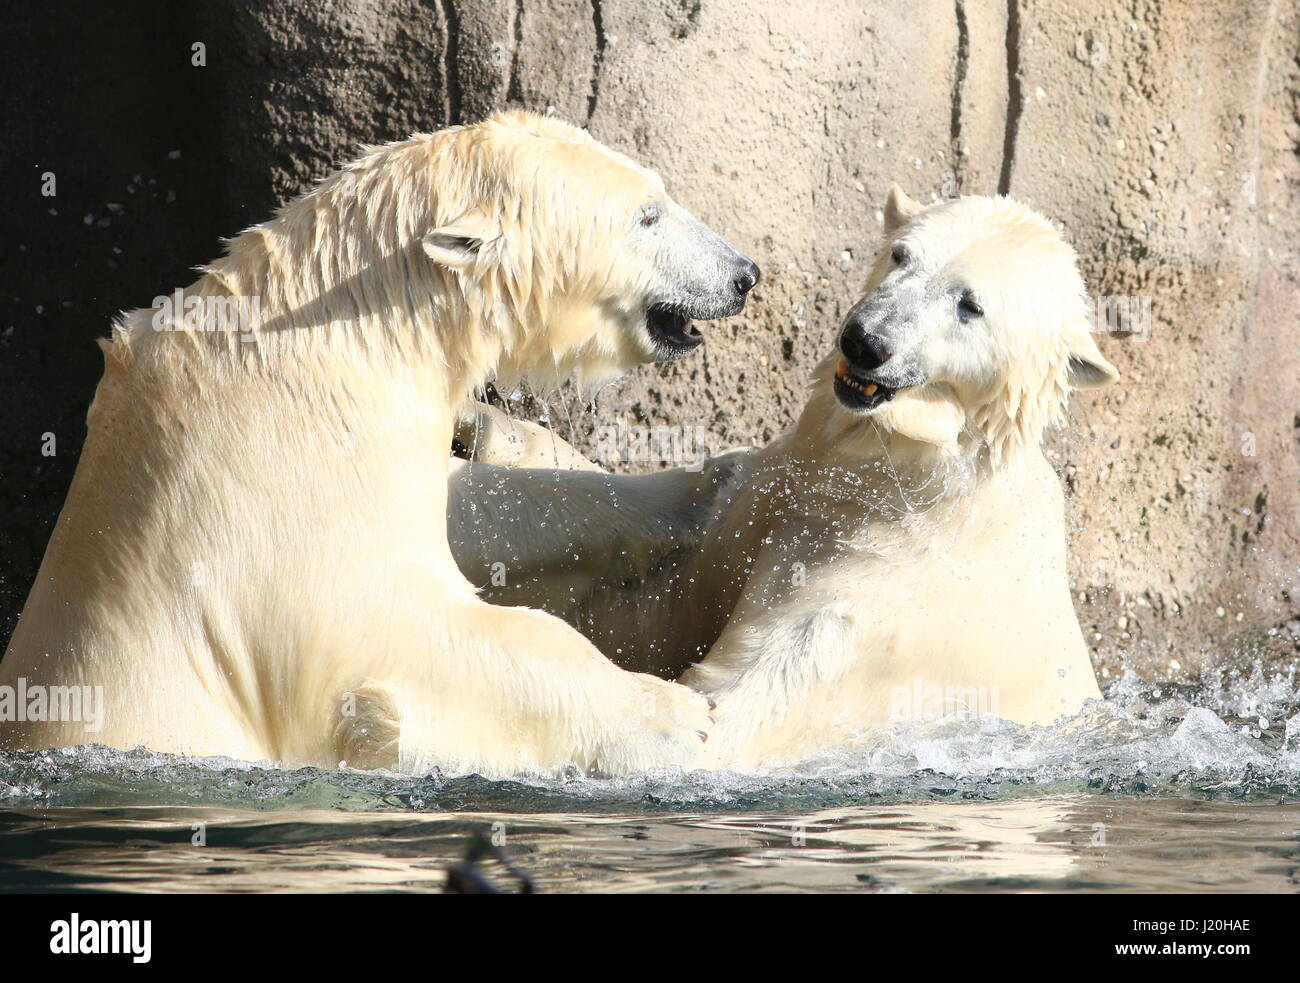 Aggressive Polar bears (Ursus maritimus) fighting in the water Stock Photo